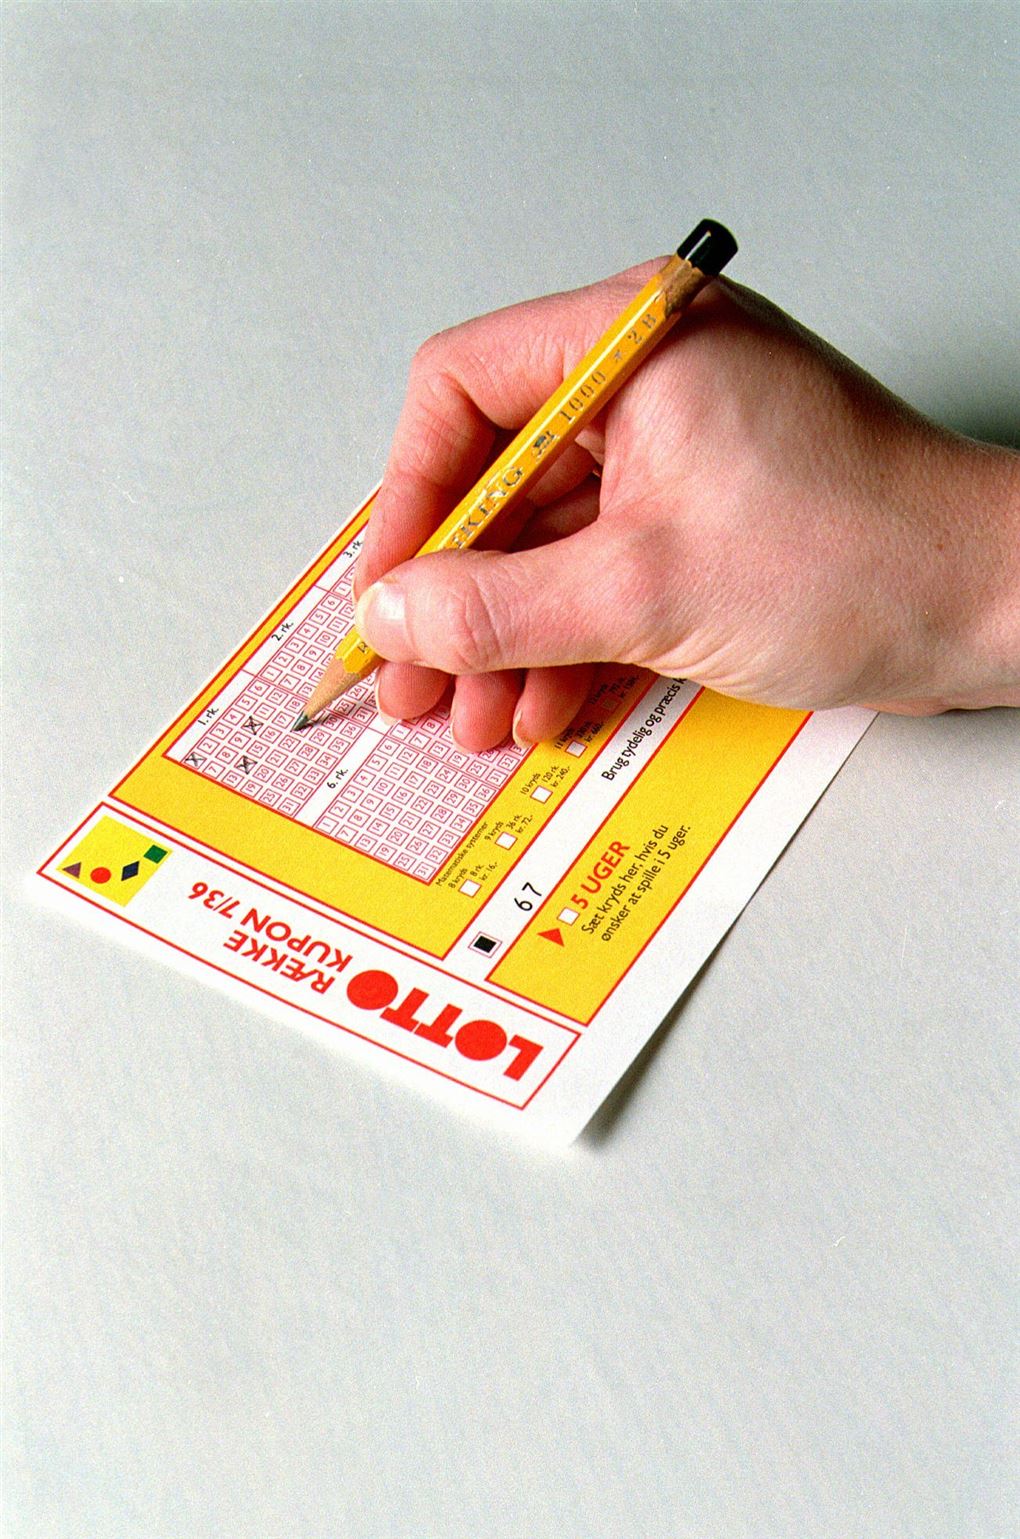 hånd med blyant udfylder lottokupon